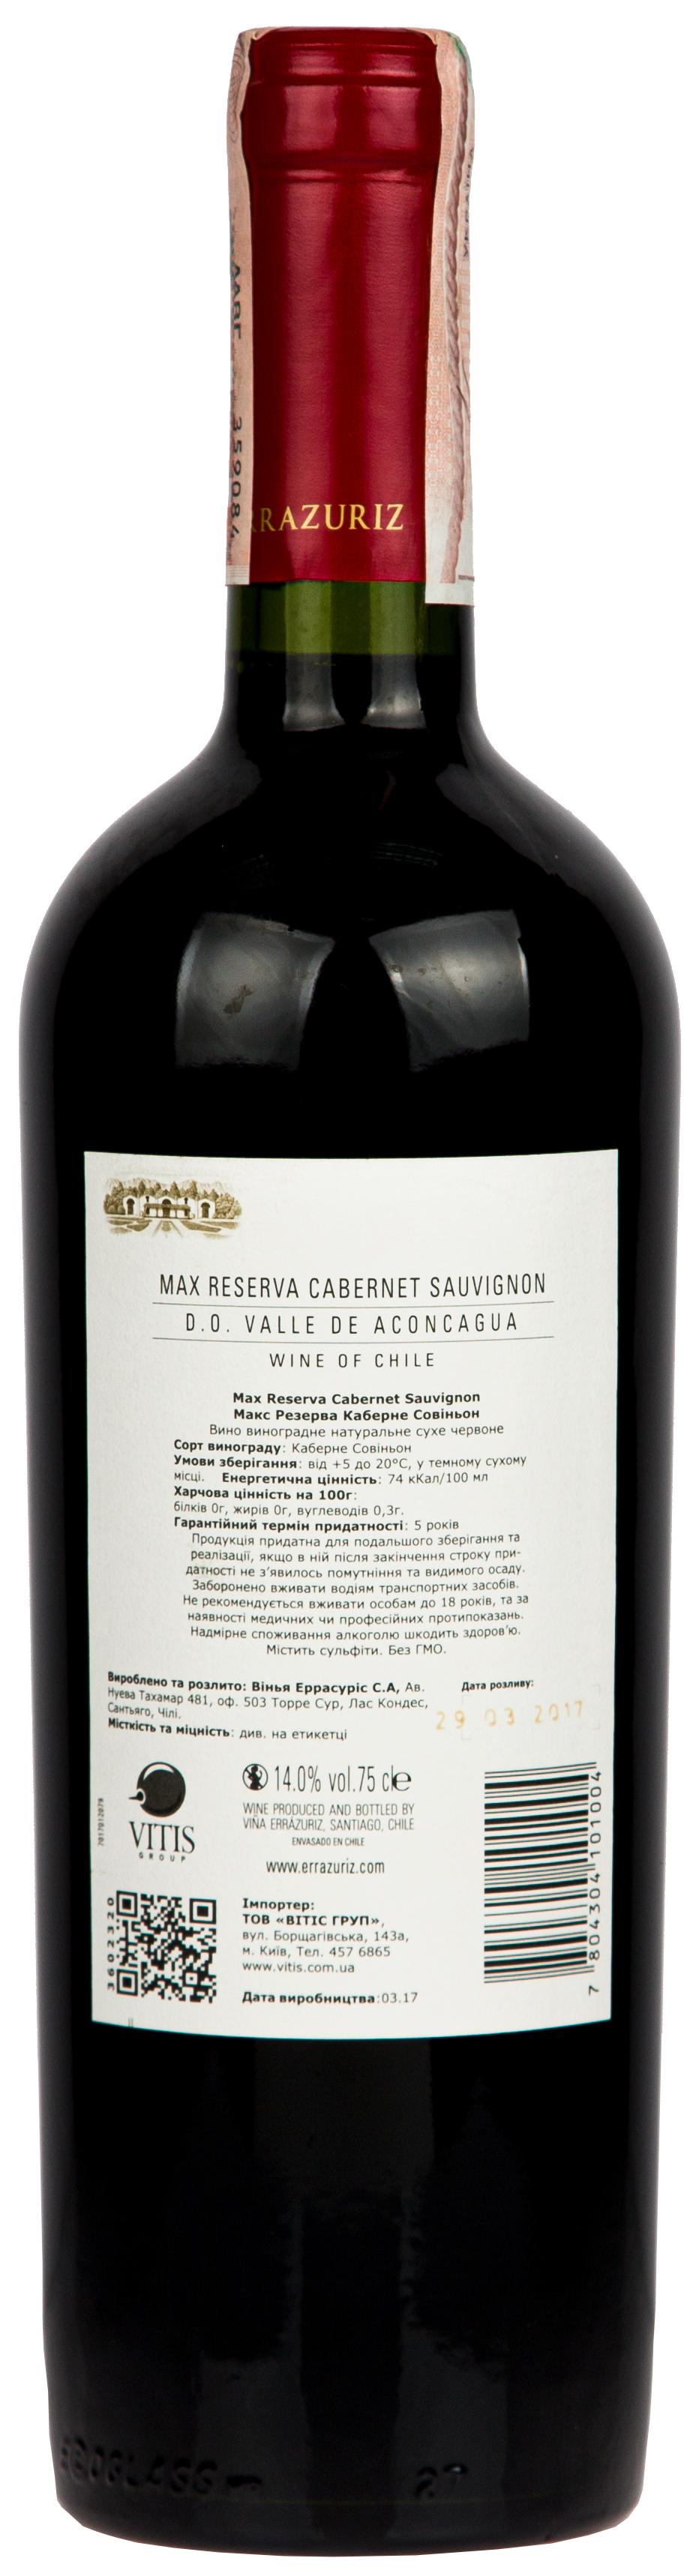 Errazuriz Max Reserva Cabernet Sauvignon 2015 Set 6 Bottles - 2